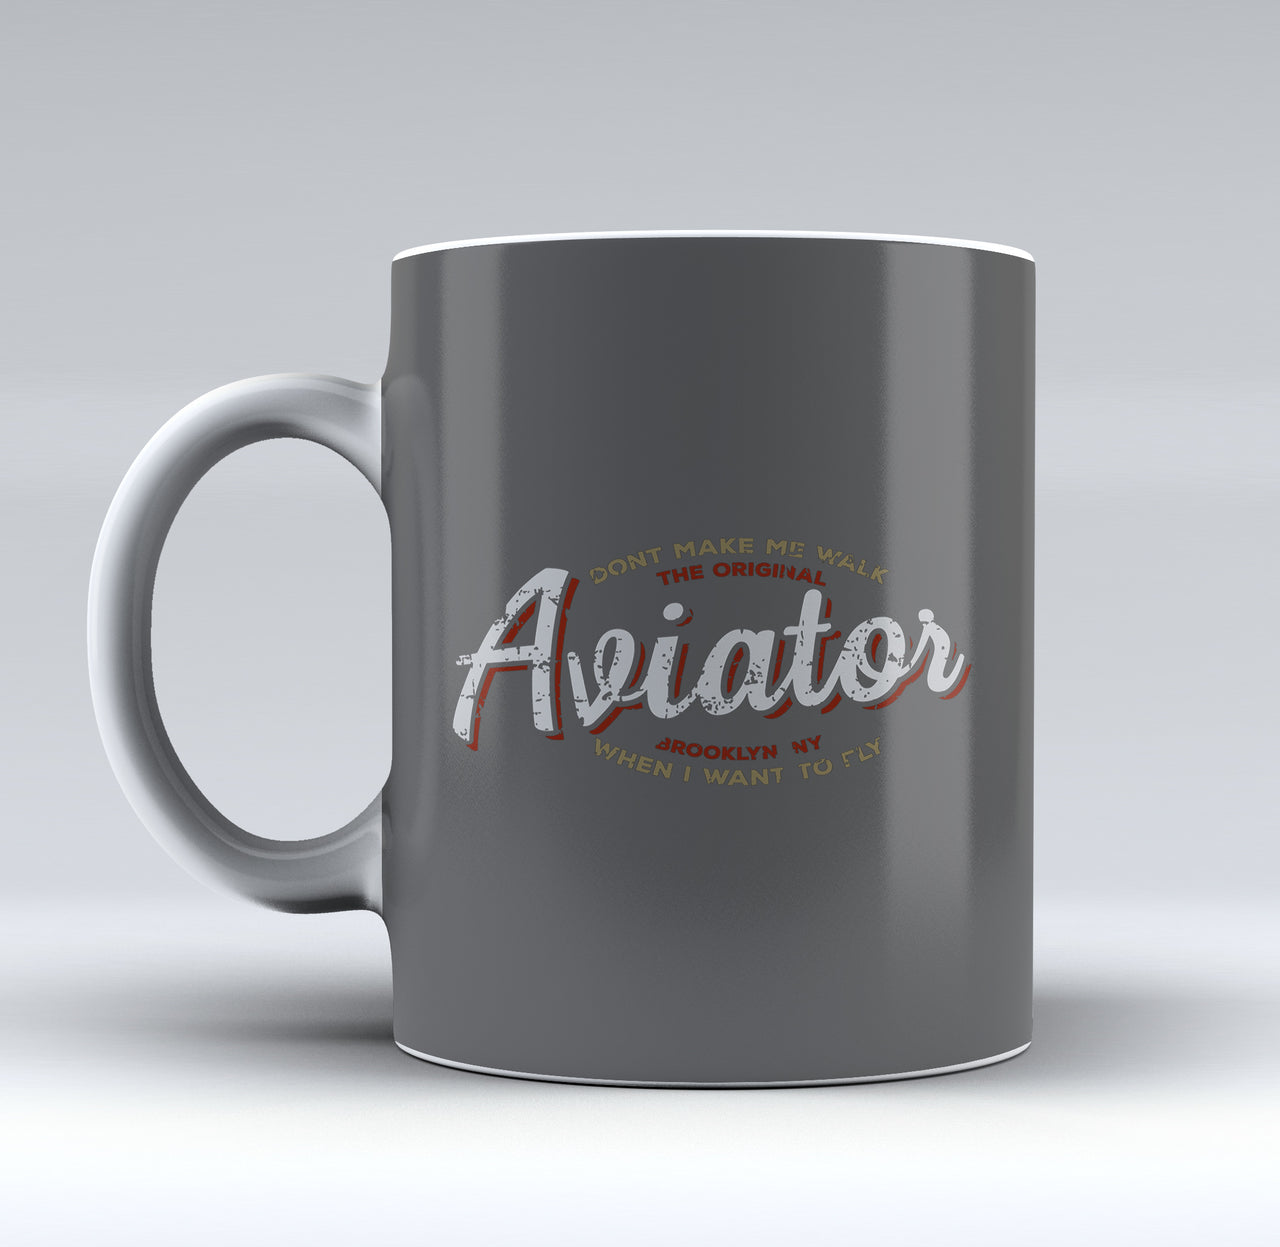 Aviator - Dont Make Me Walk Designed Mugs